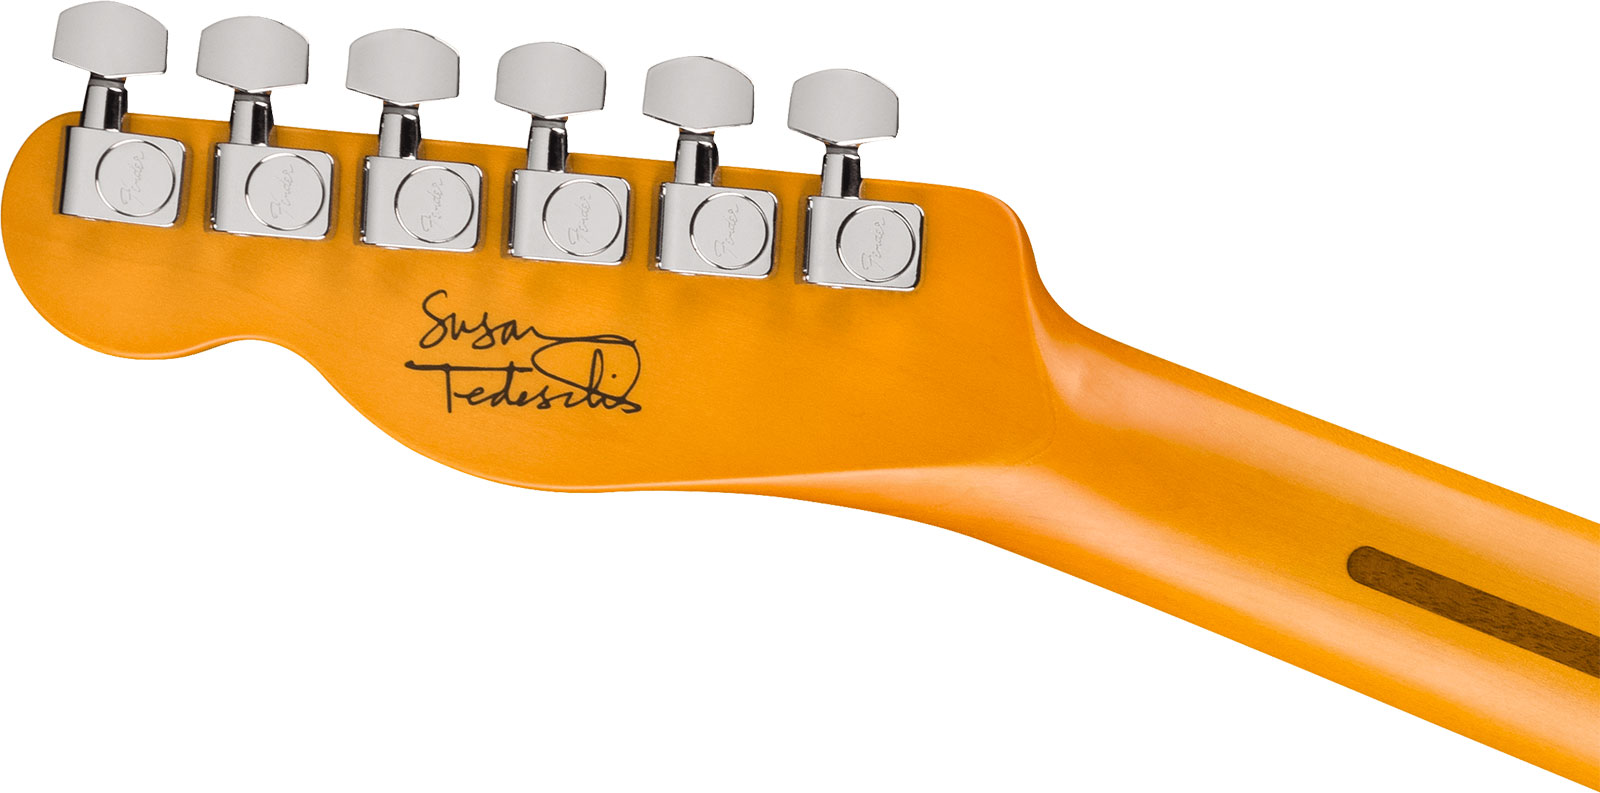 Fender Susan Tedeschi Tele Usa Signature 2s Ht Rw - Aged Caribbean Mist - Televorm elektrische gitaar - Variation 4